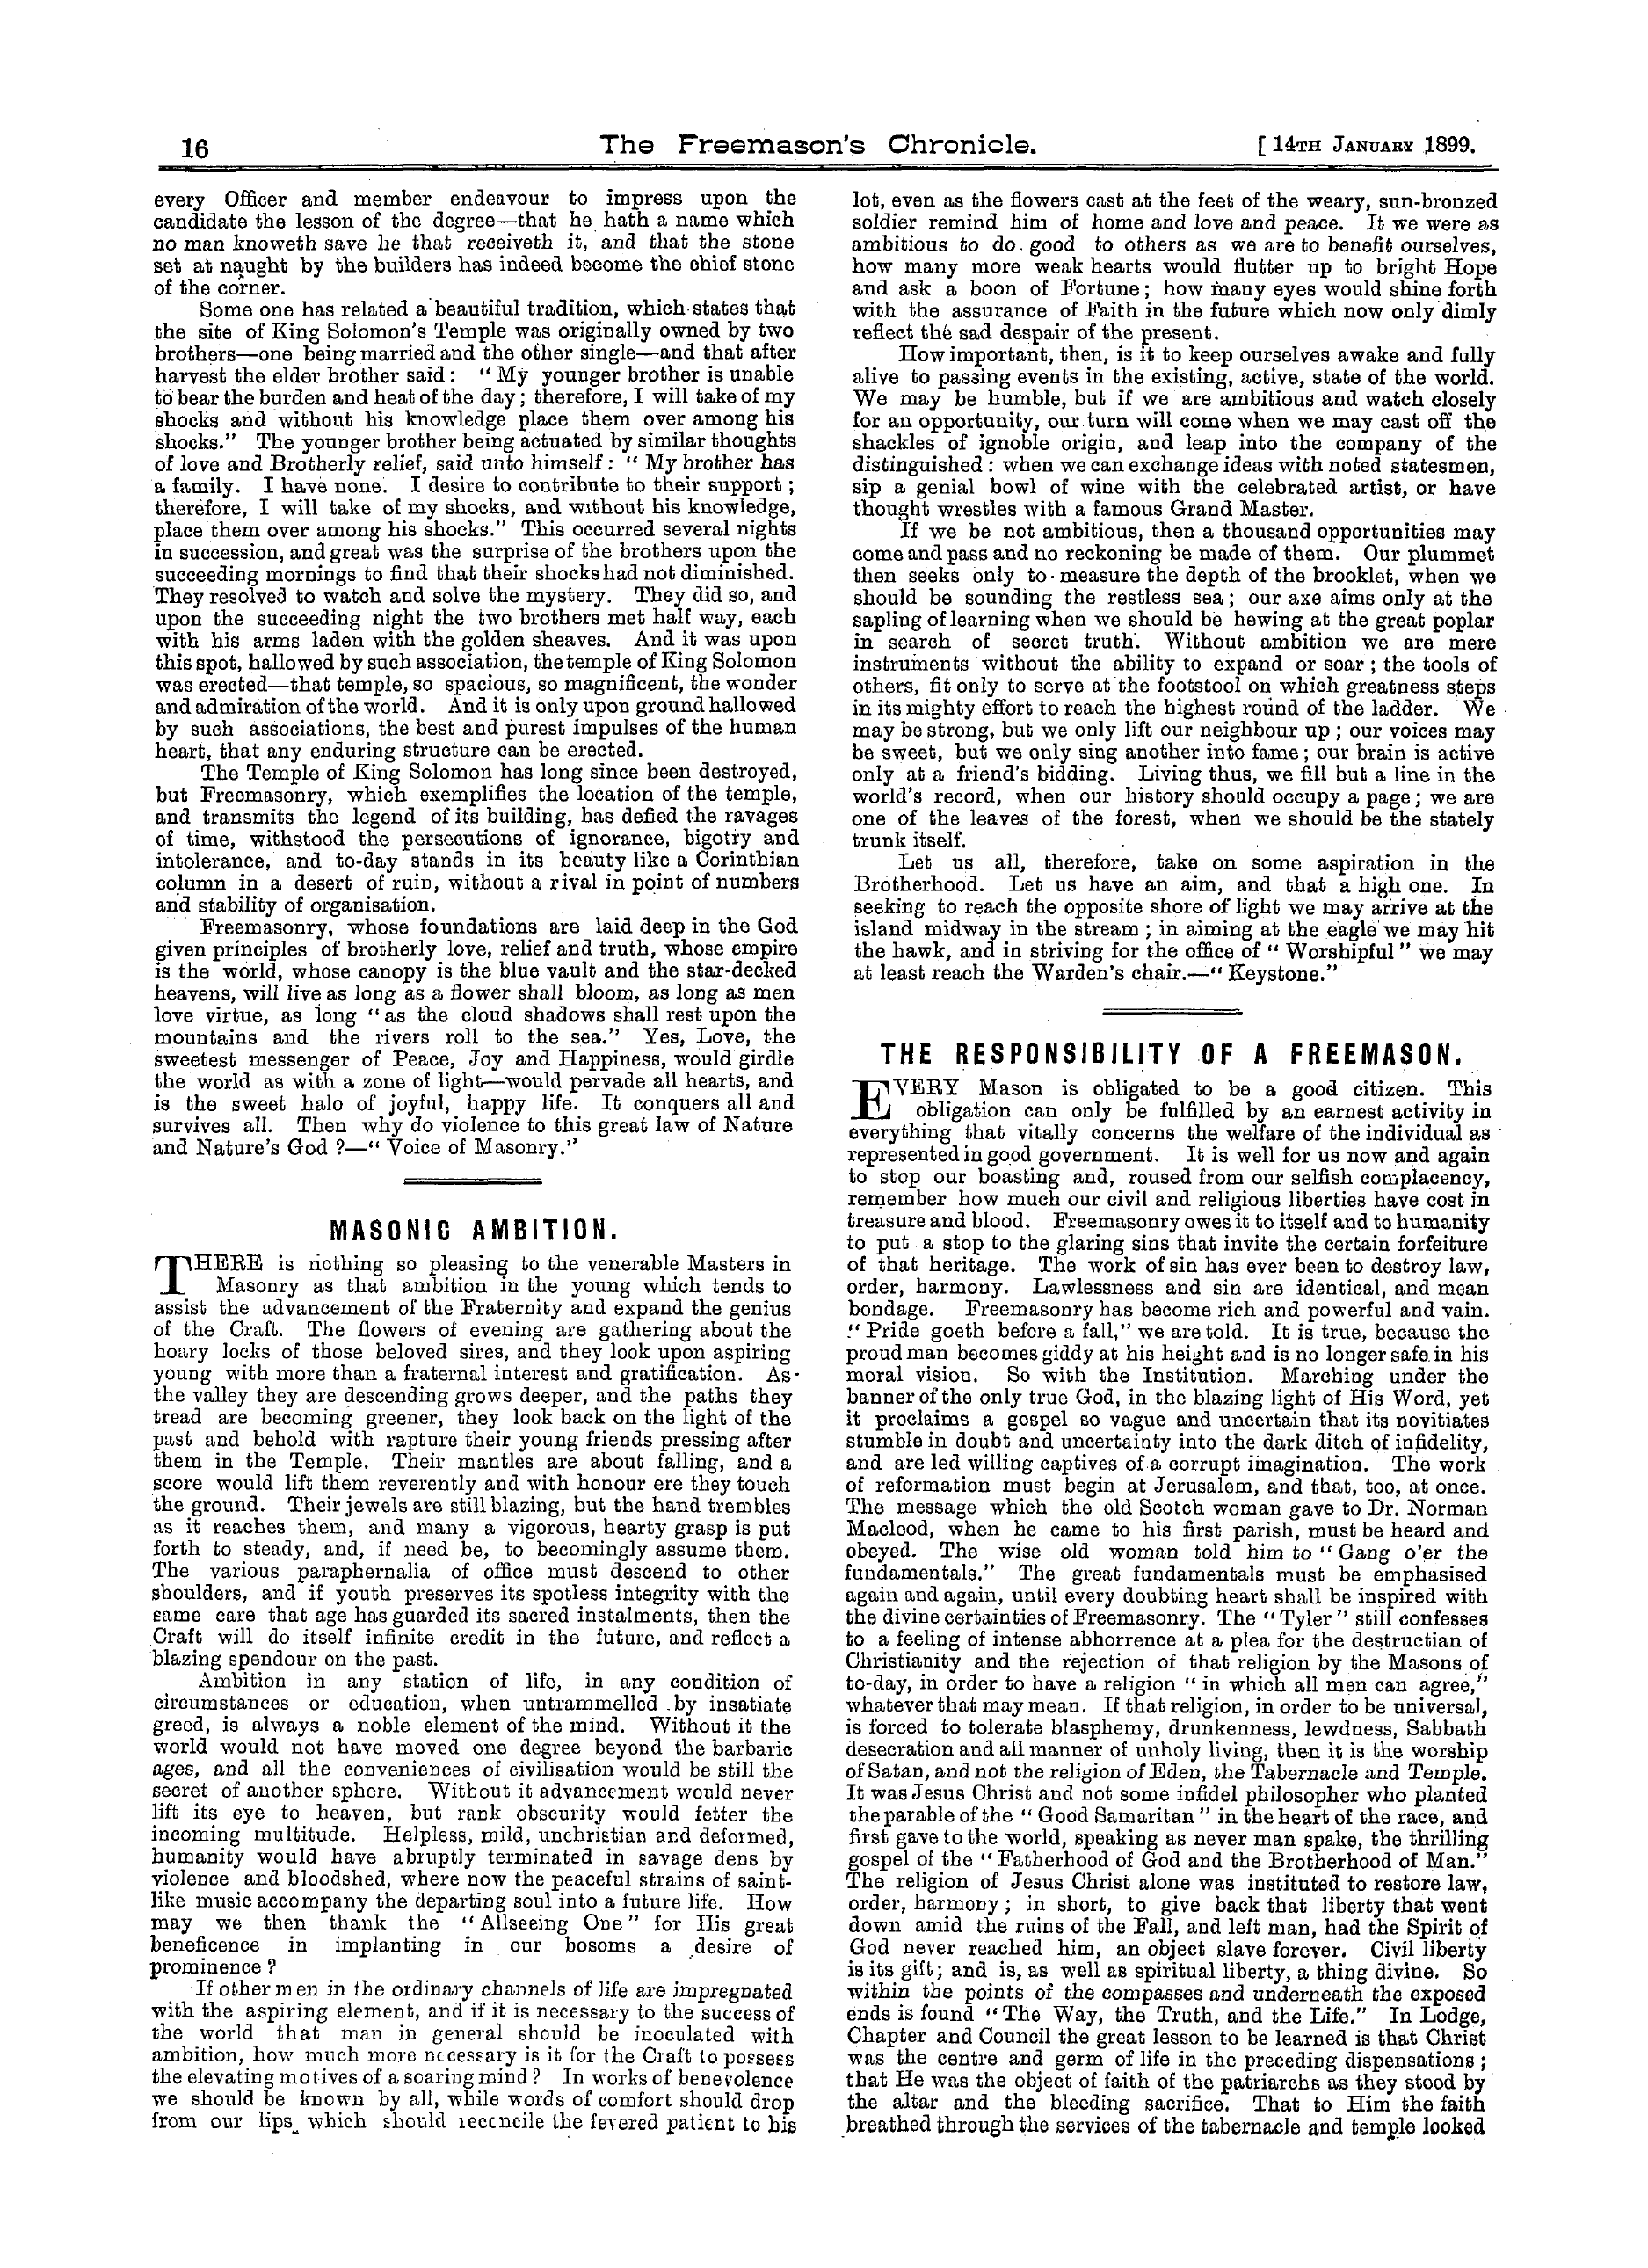 The Freemason's Chronicle: 1899-01-14: 4